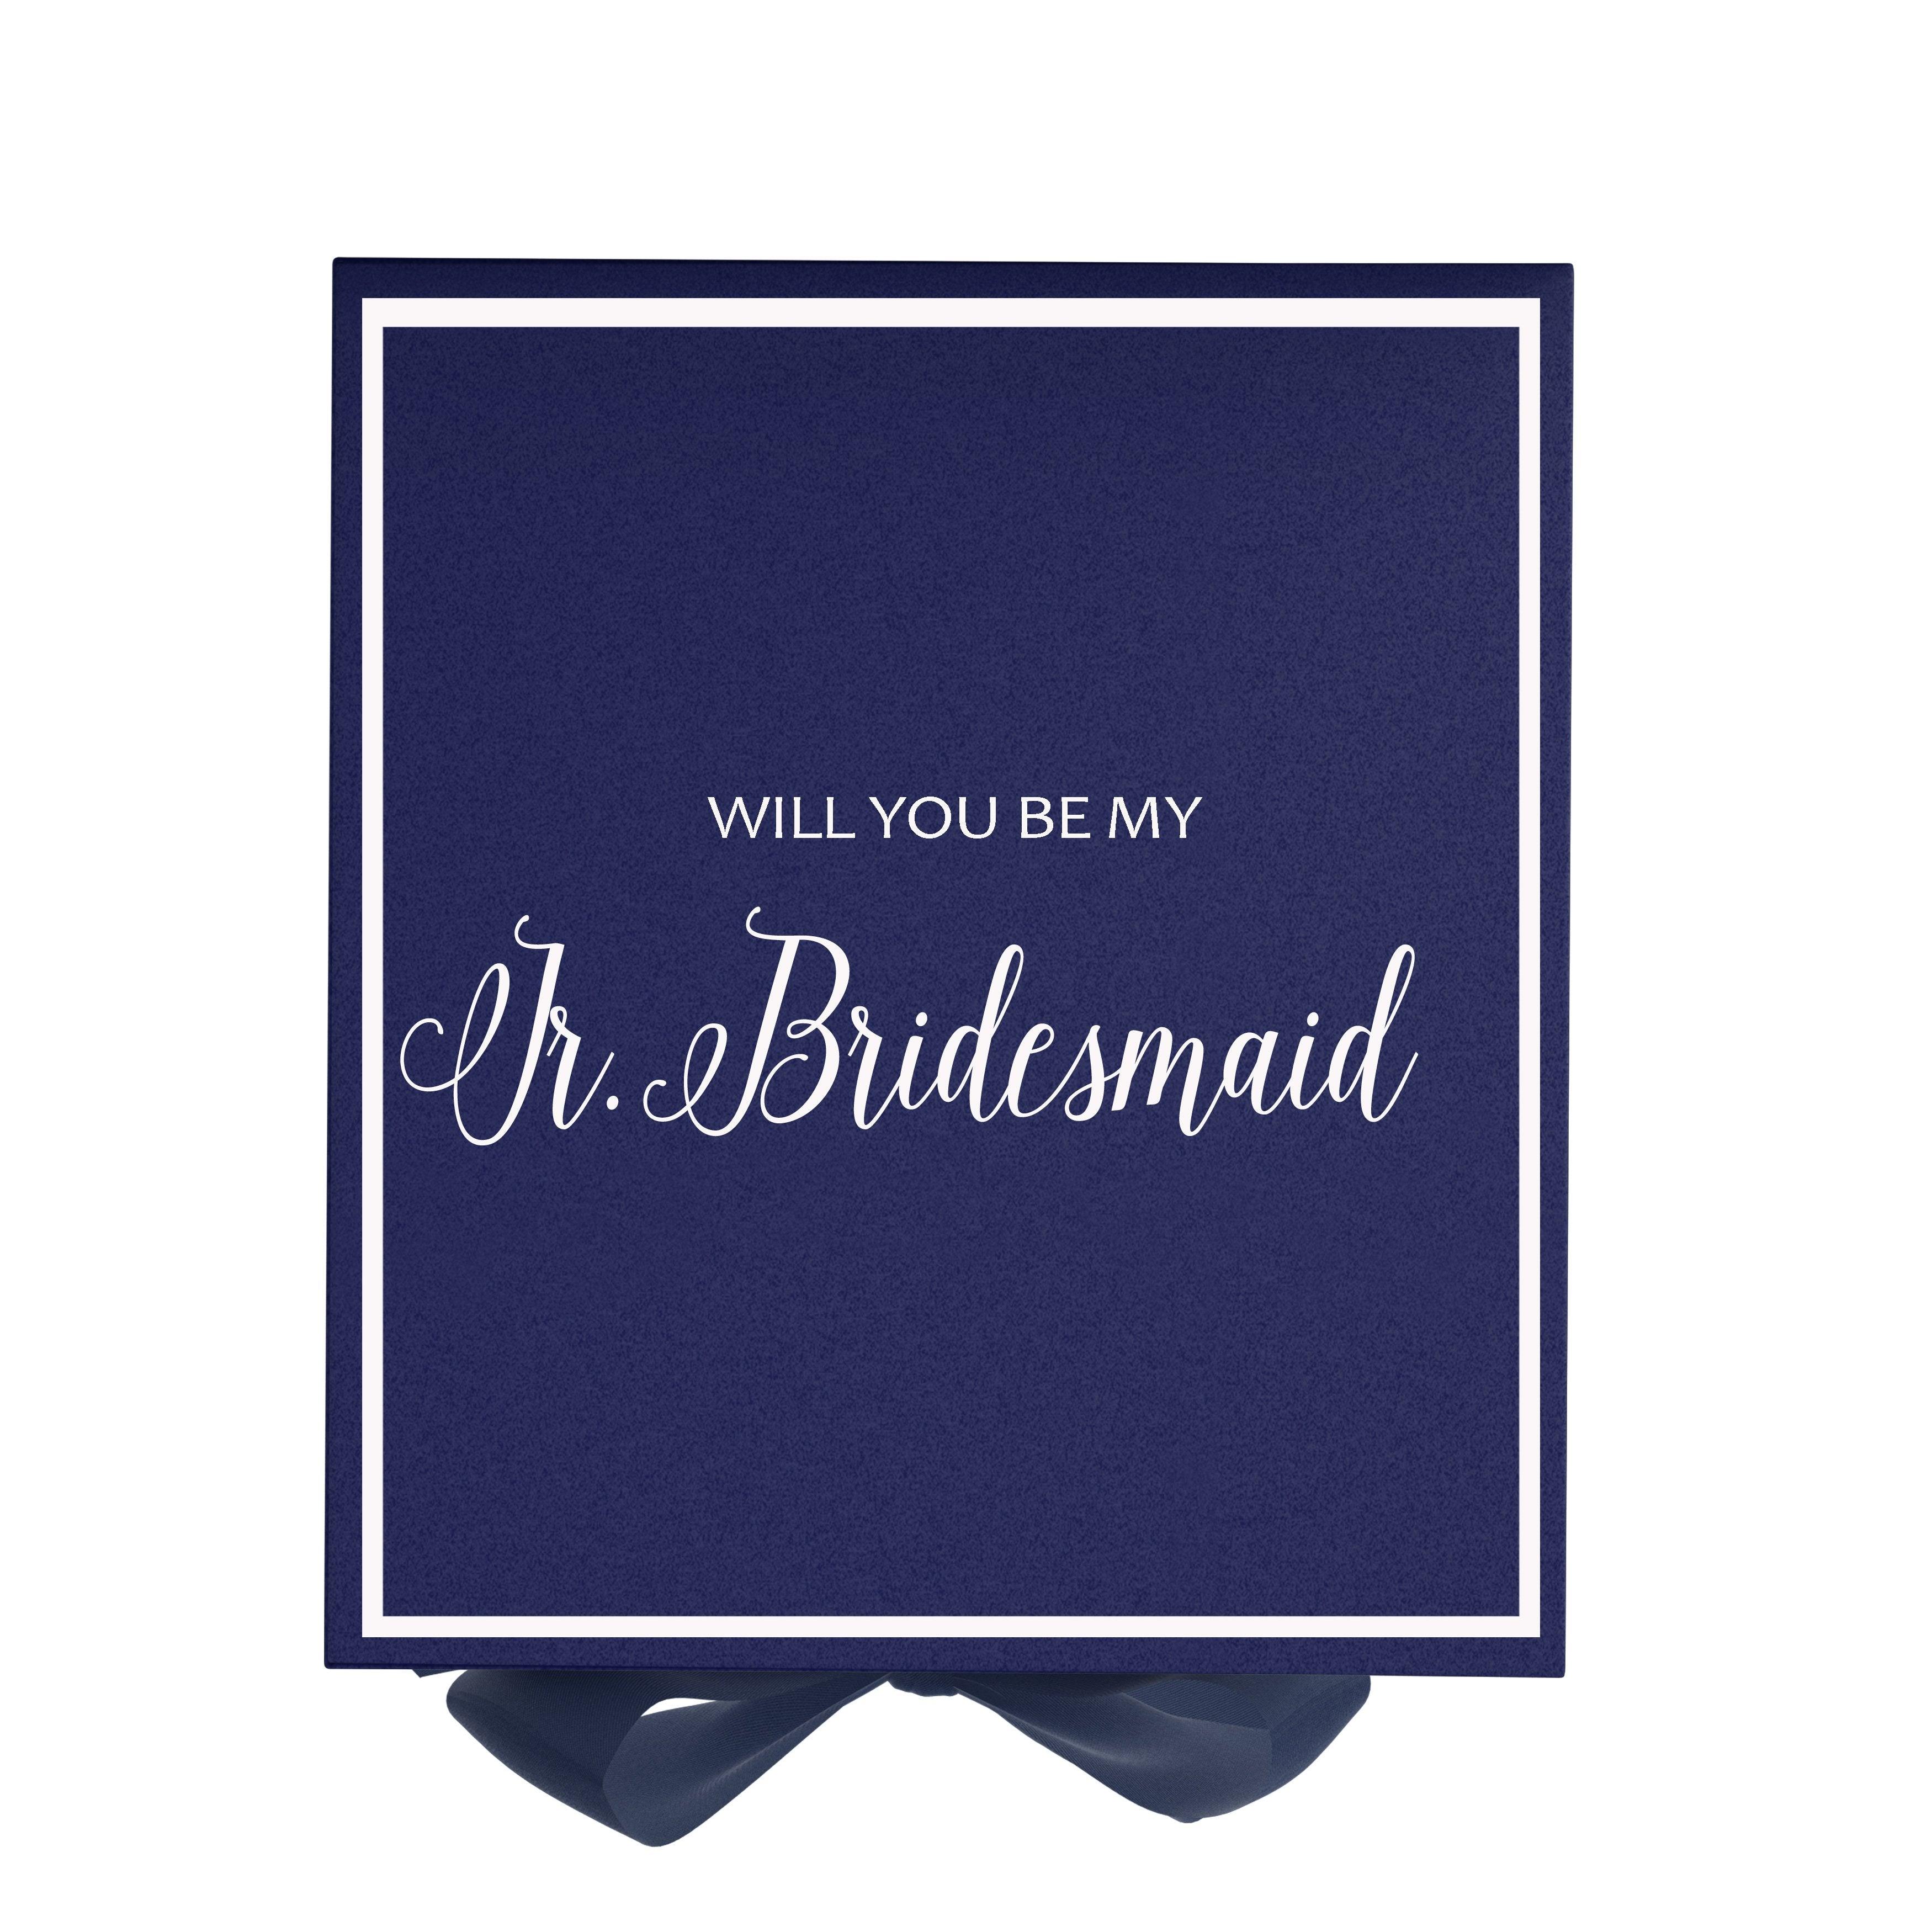 Will You Be My Jr Bridesmaid? Proposal Box Navy - Border by Tshirt Unlimited - Vysn